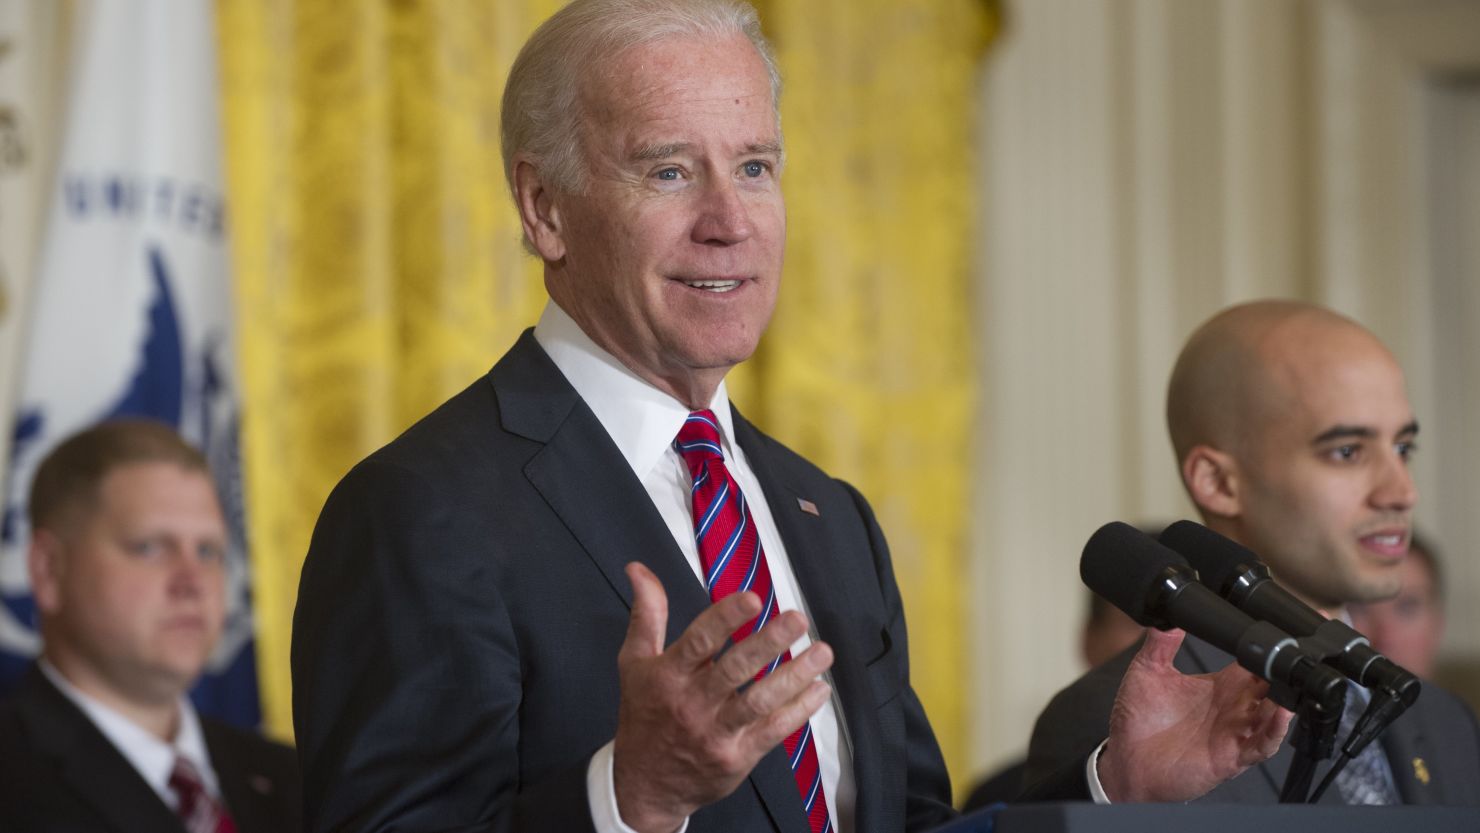 Vice President Joe Biden heads to Iowa fish fry this weekend